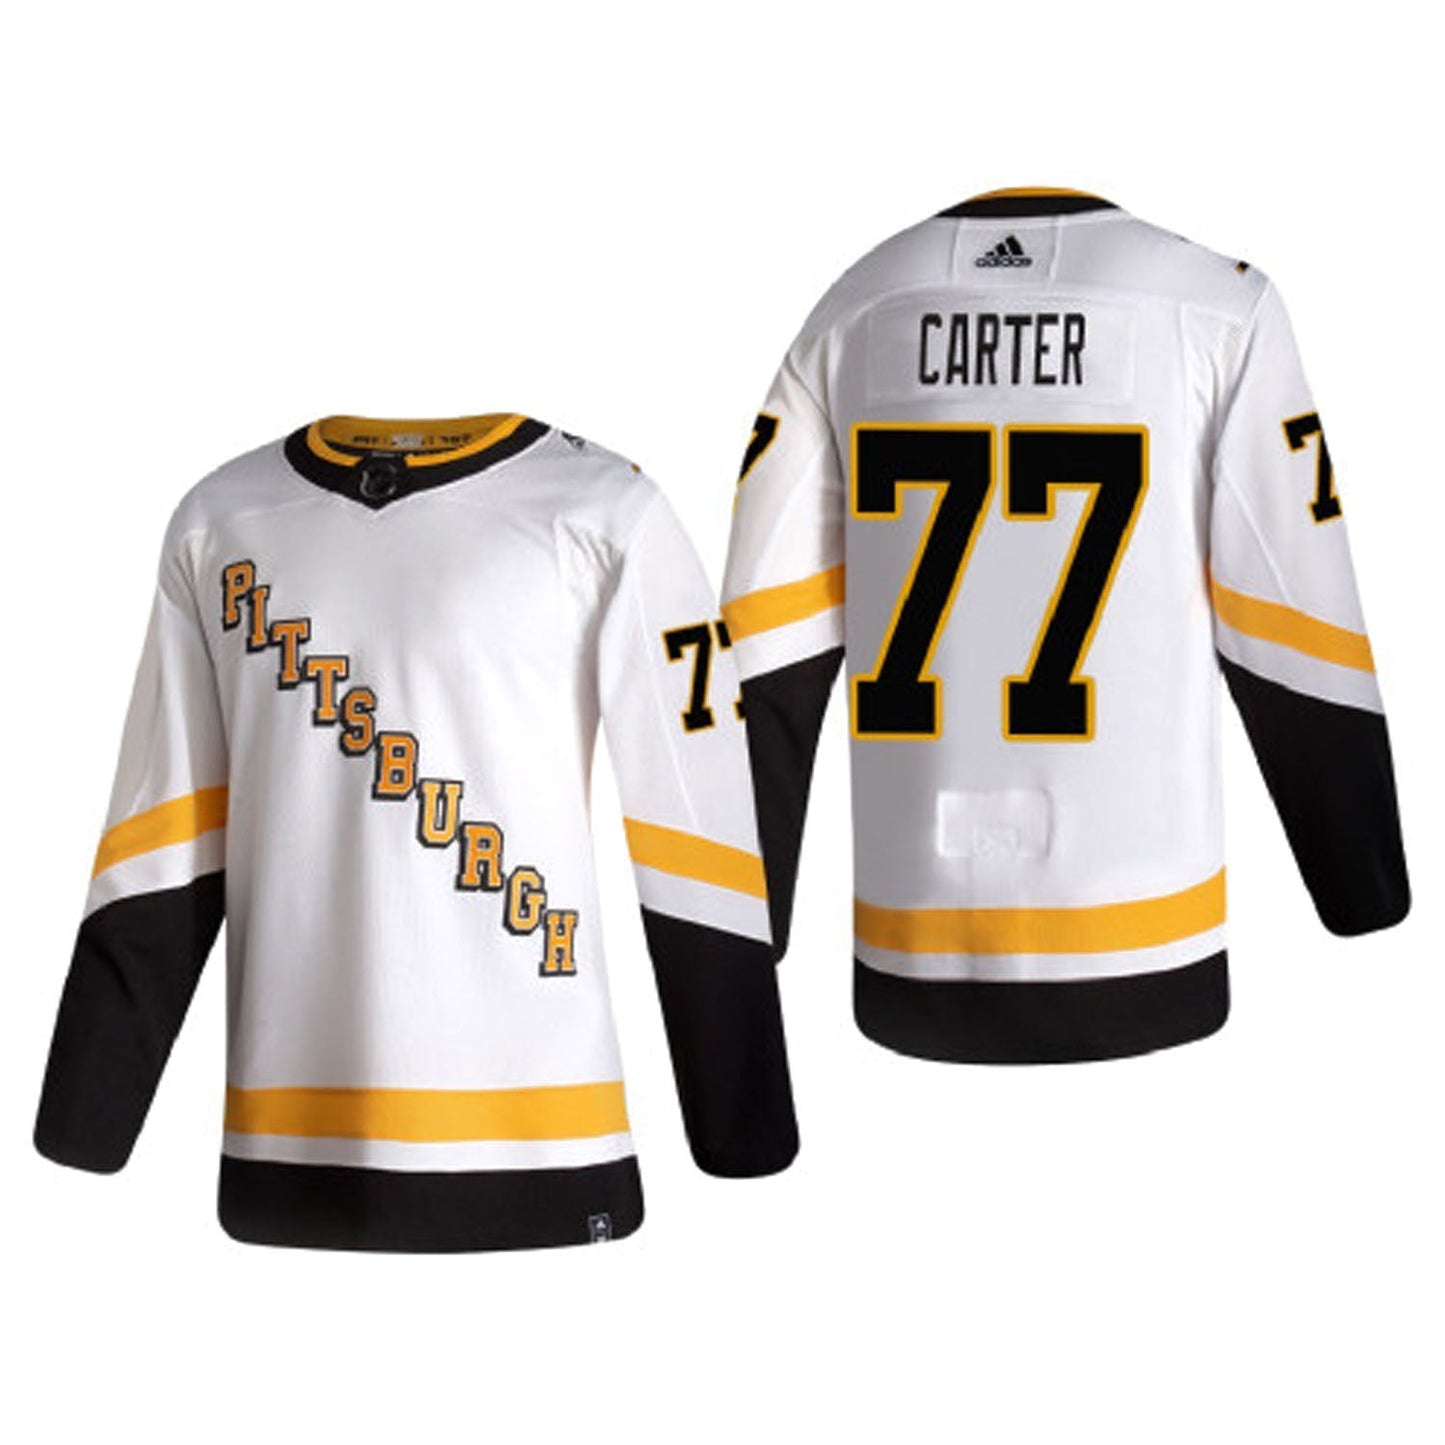 NHL Jeff Carter Pittsburgh Penguins 77 Jersey